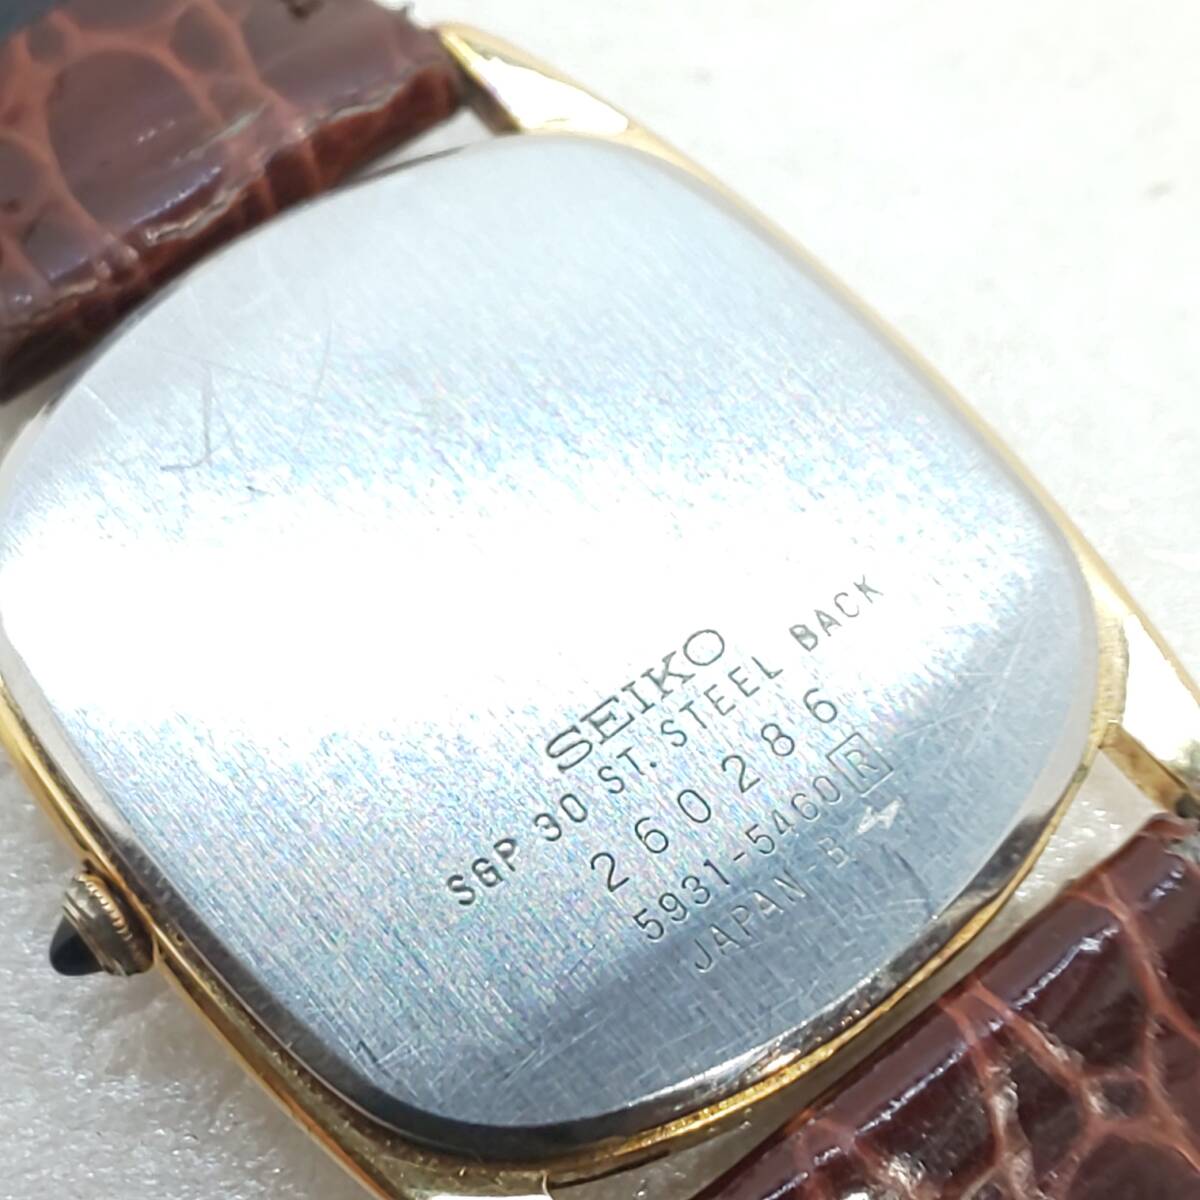 ** Seiko **SEIKO Dolce 5931-5460 Dolce Gold циферблат SGP30 кейс мужские наручные часы батарейка заменен * коллекционный выпуск 